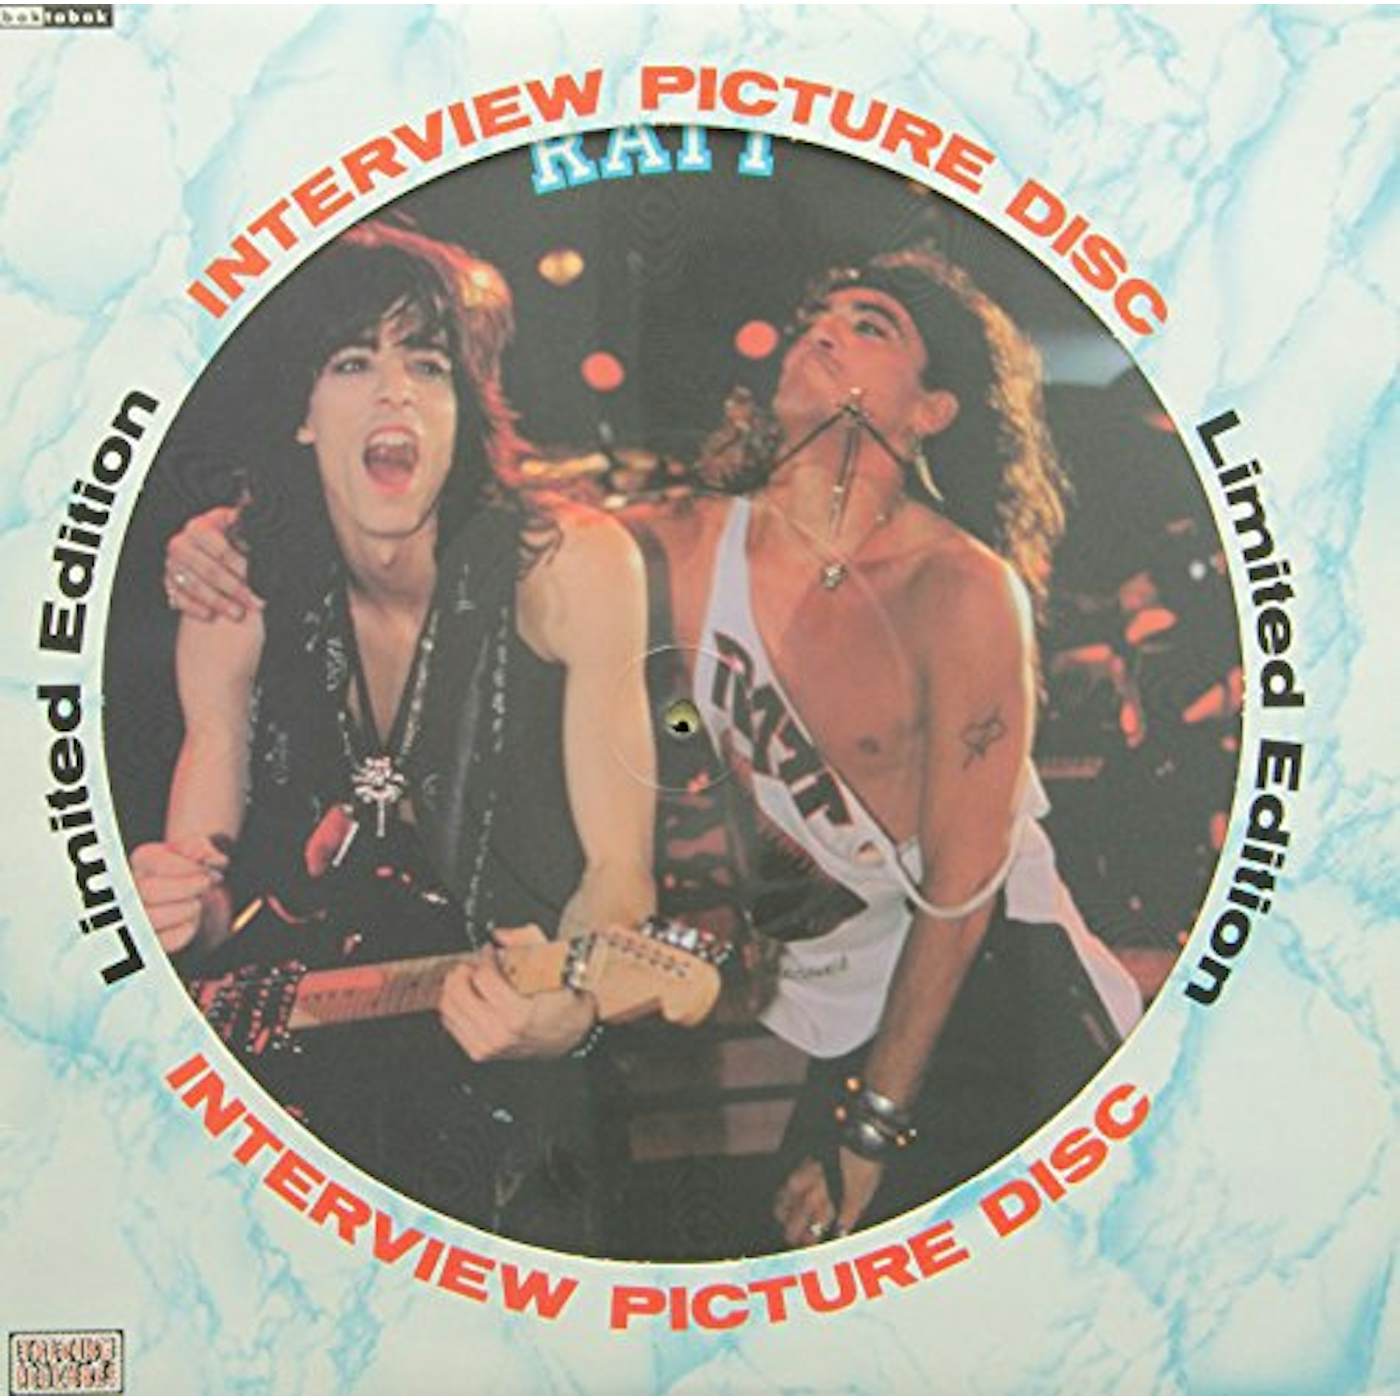 Ratt INTERVIEW PICTURE DISC Vinyl Record